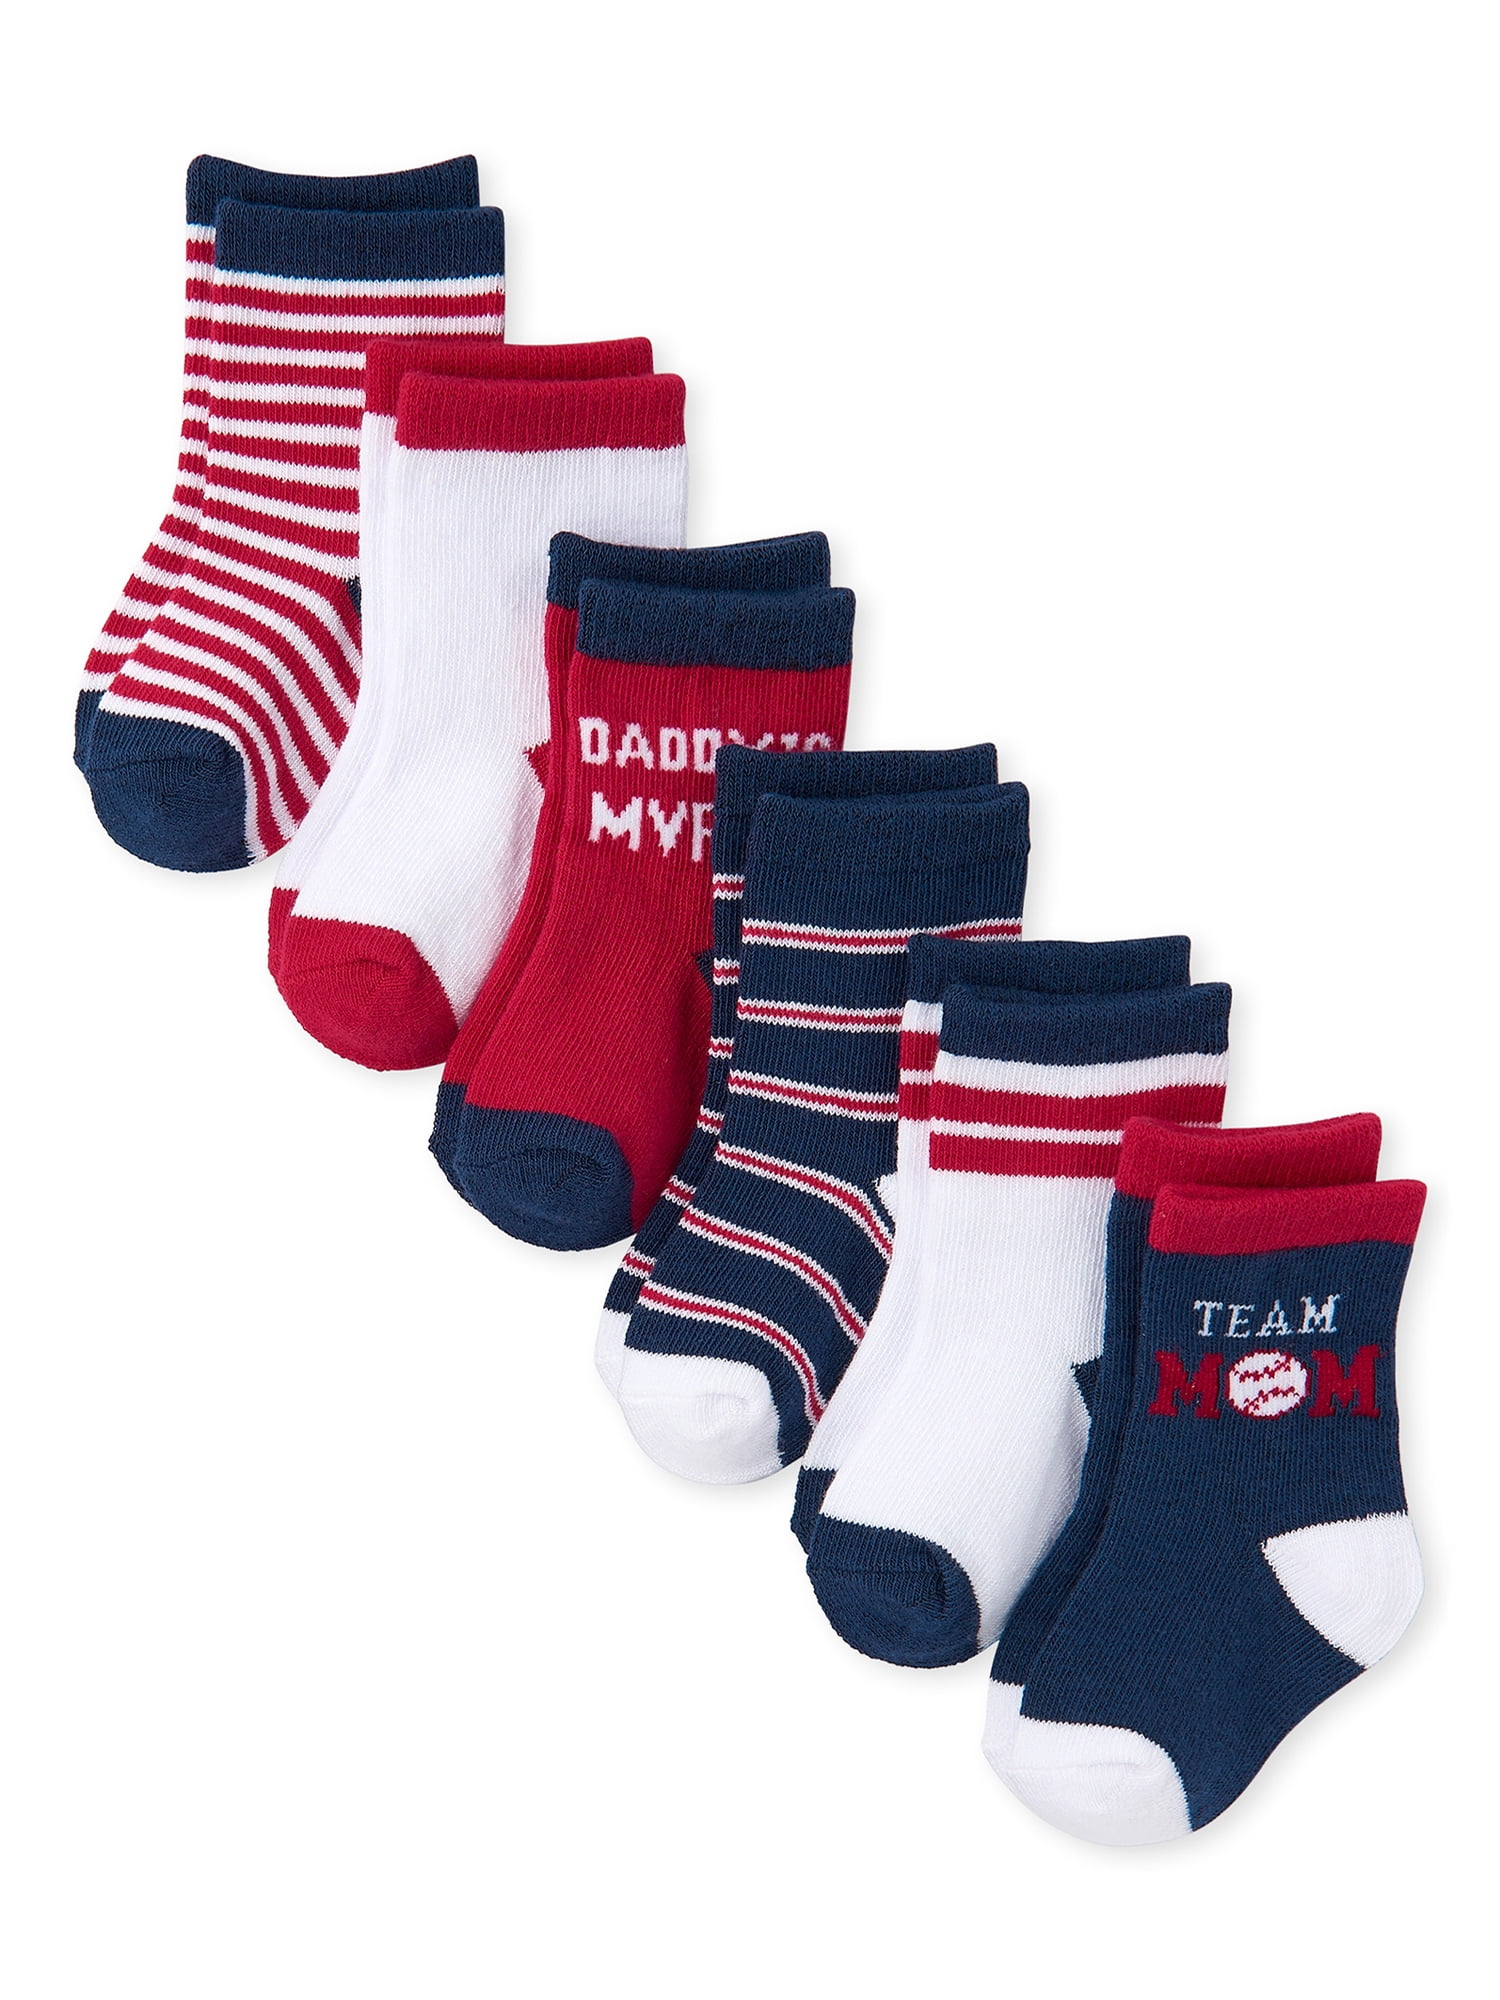 Gymboree Basic Green Socks Boys Size 6-12 Months NEW 